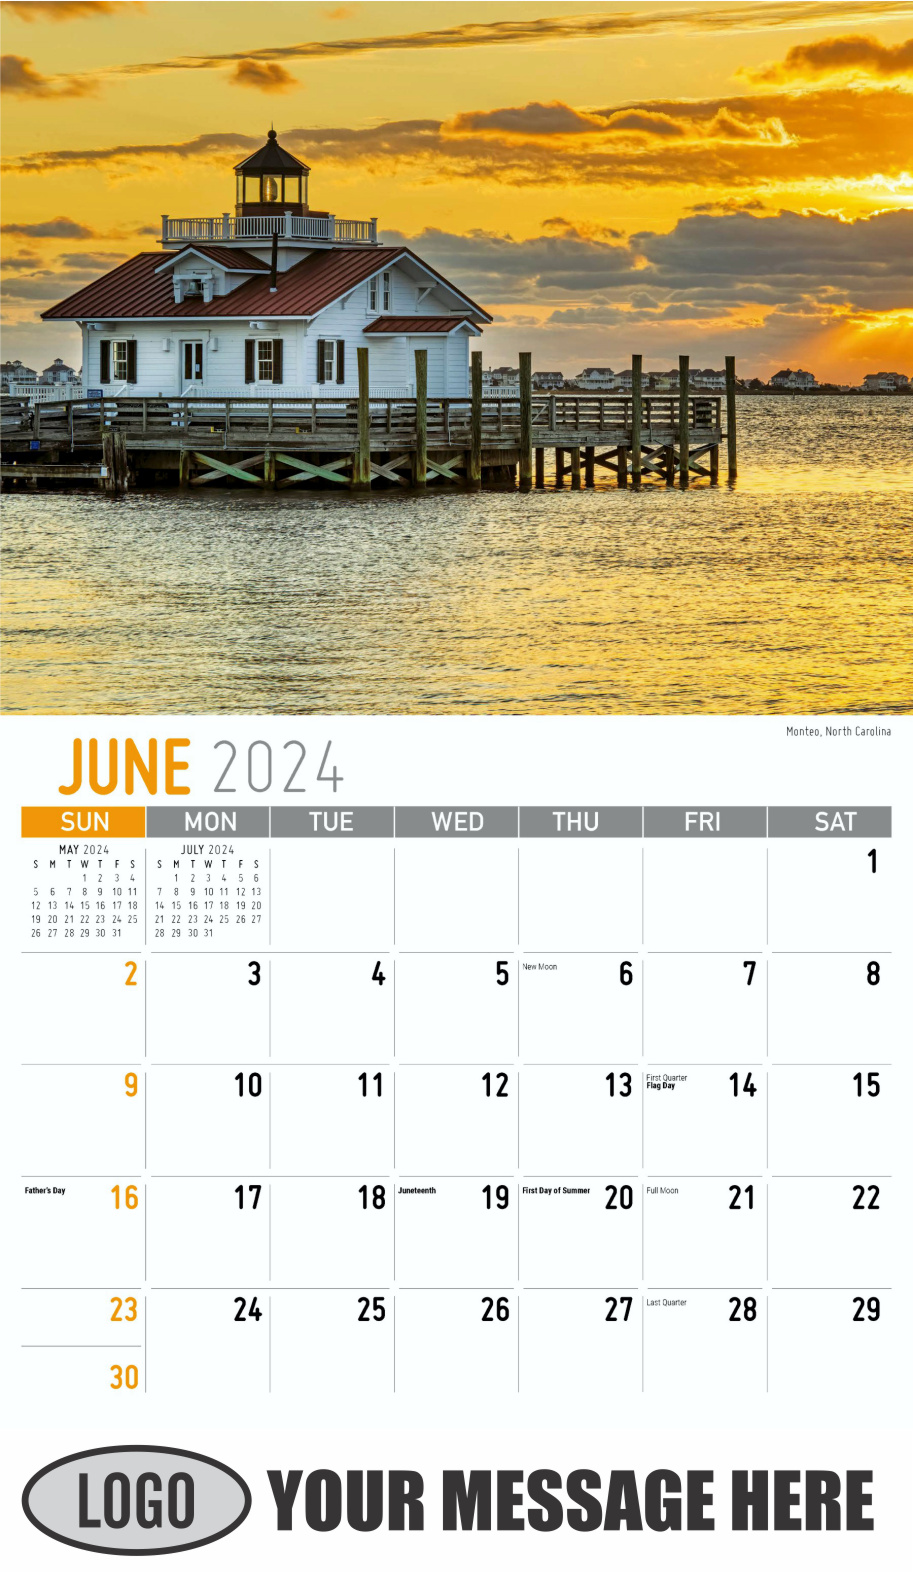 Scenes of Southeast USA 2024 Business Promo Wall Calendar - June